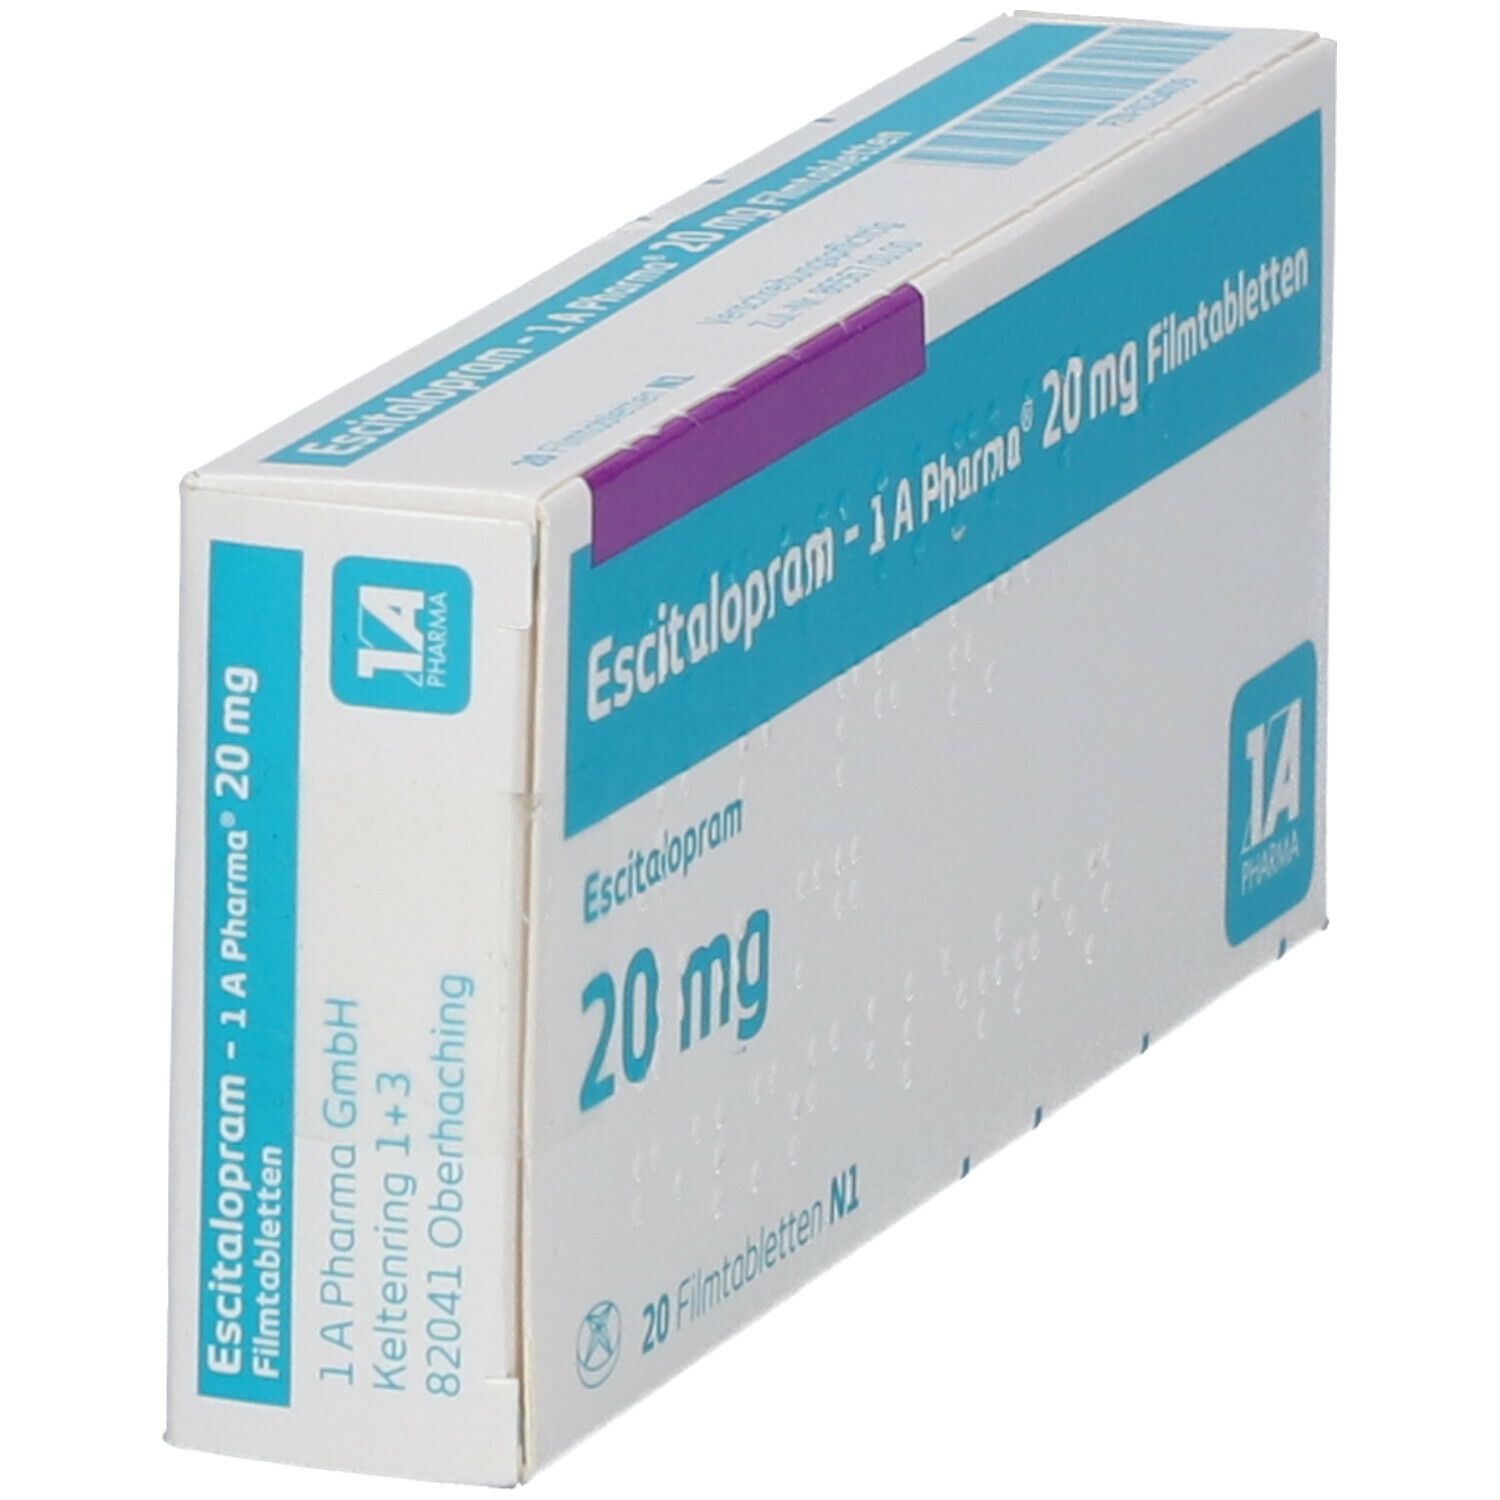 Escitalopram - 1 A Pharma® 20 mg